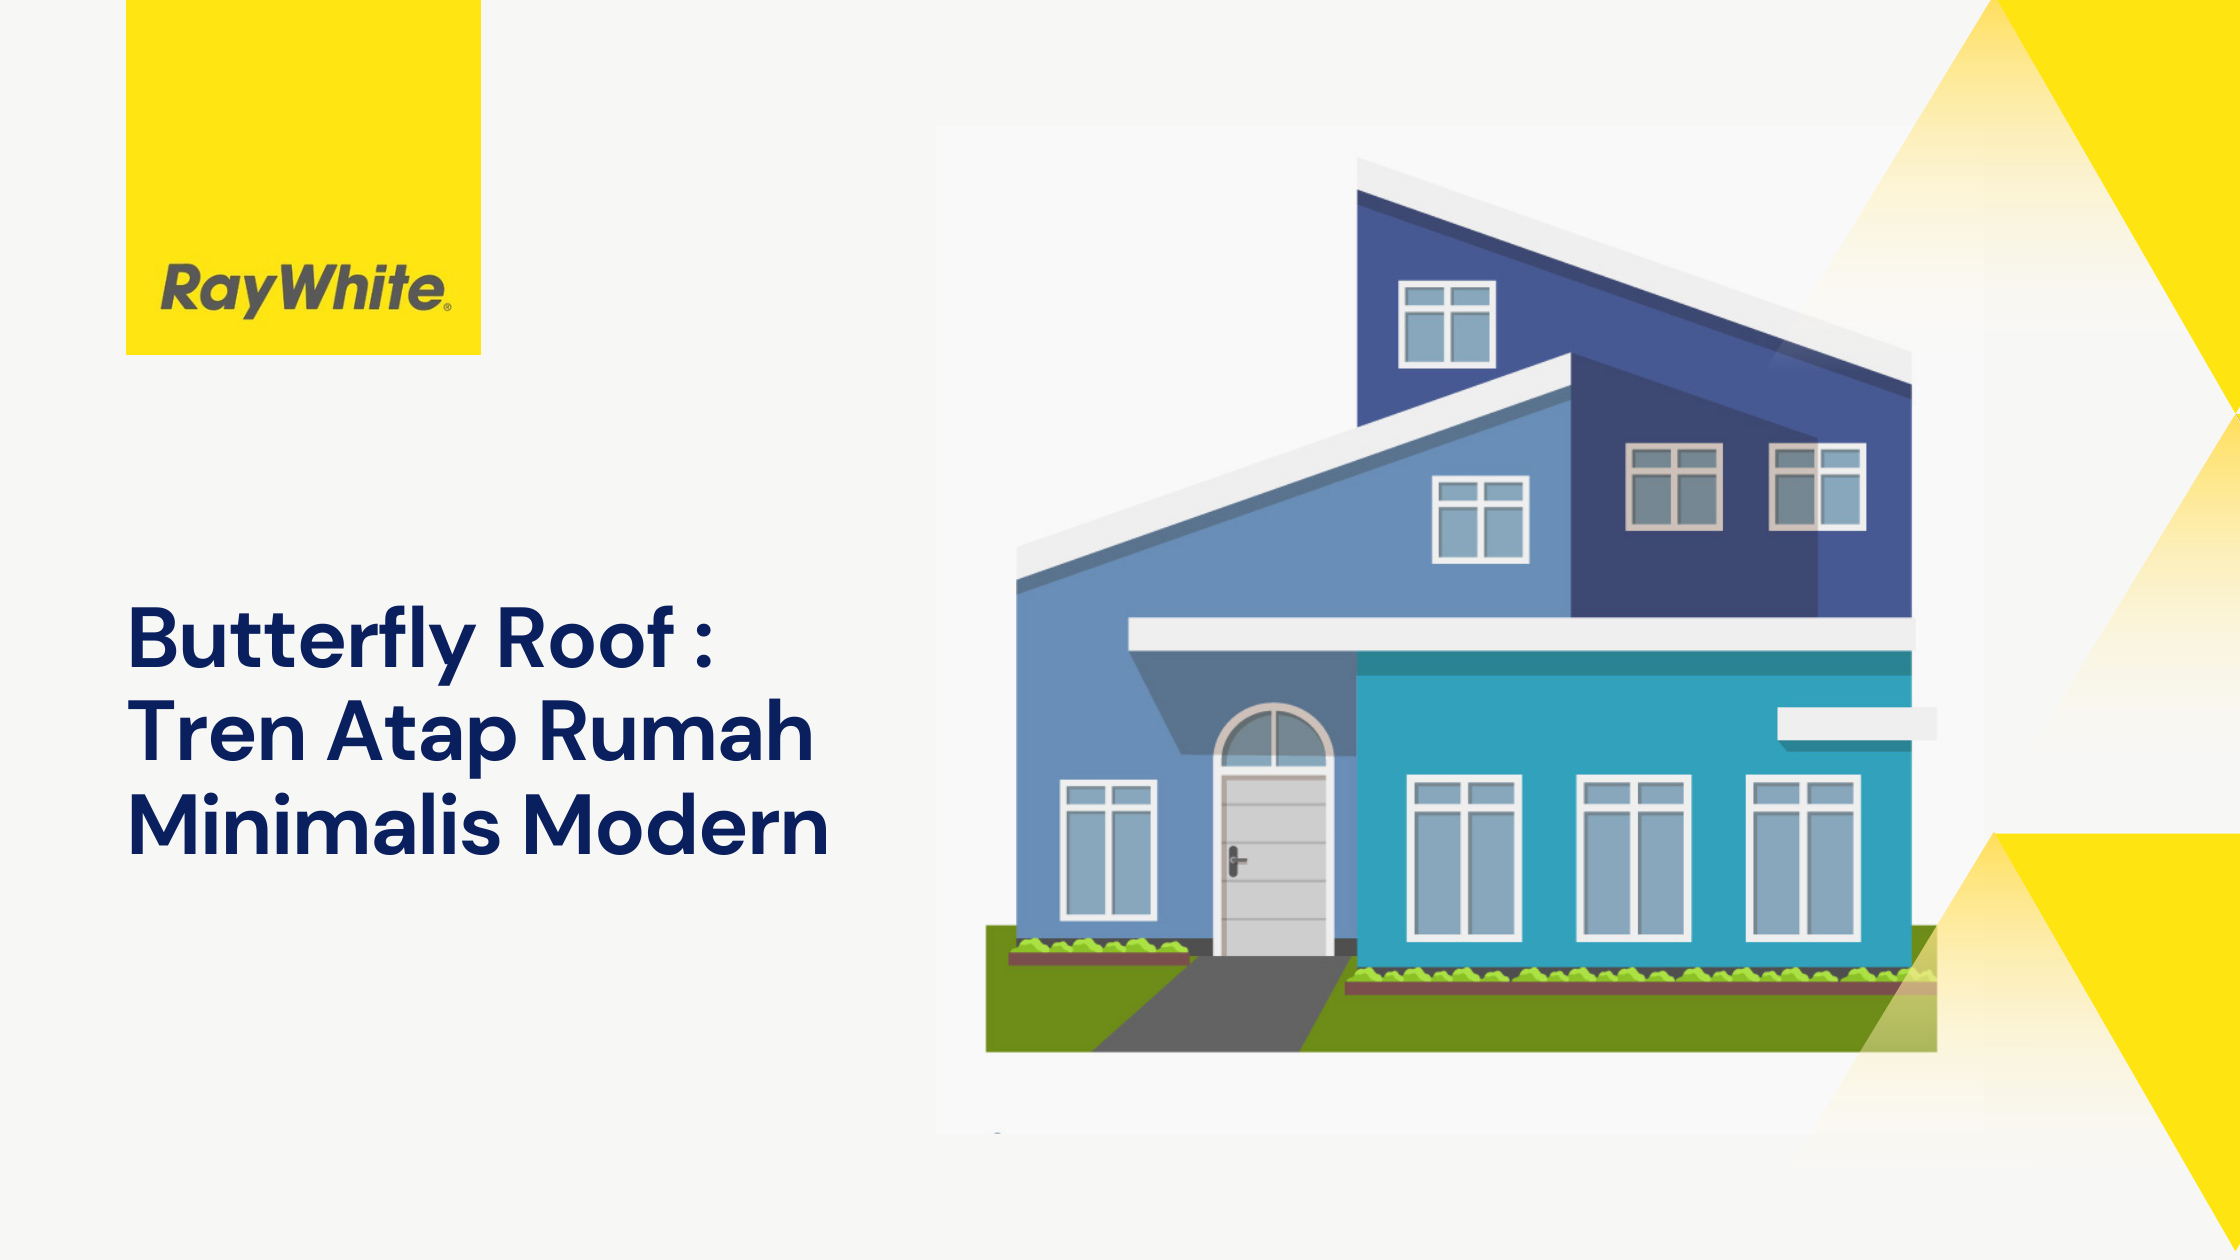 Butterfly-Roof-Lean-To-Roof-Skillion Roof-Tren-Atap-Rumah-Minimalis-Modern-2020